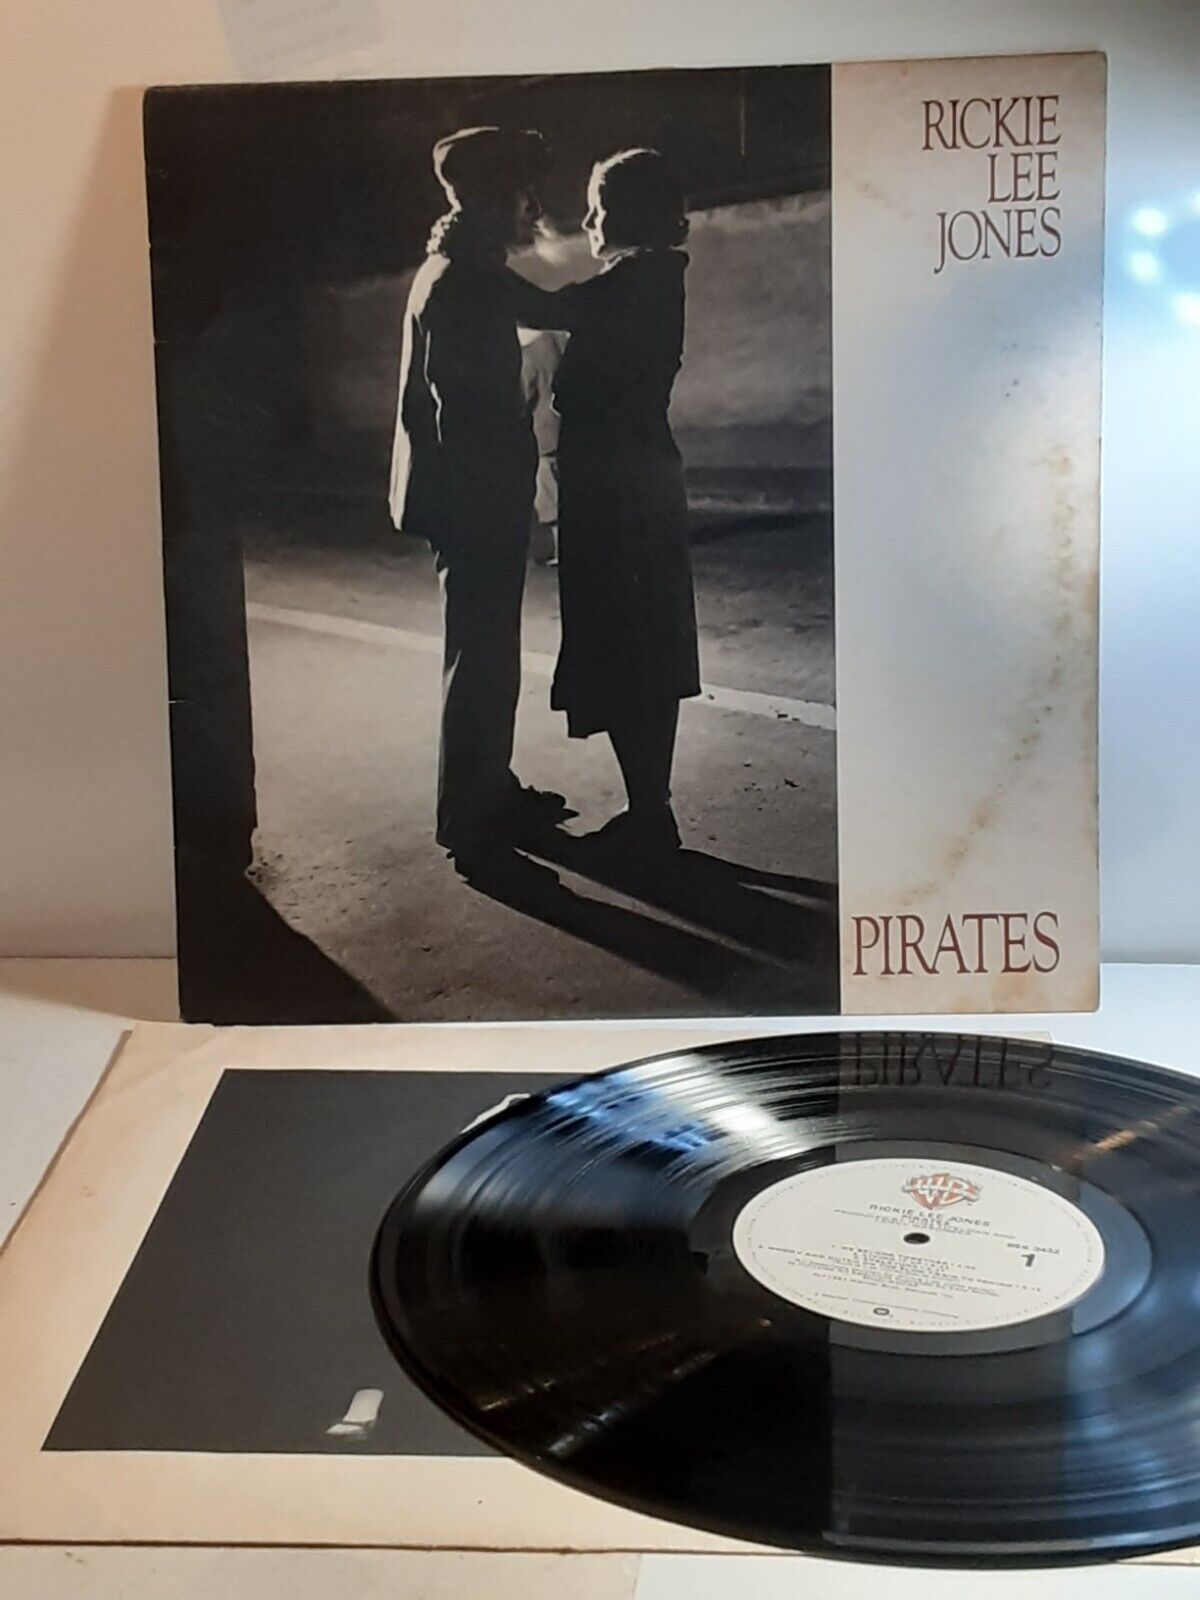 Rickie Lee Jones Pirates 1981 Warner Bros. Records BSK 3432 tested V5